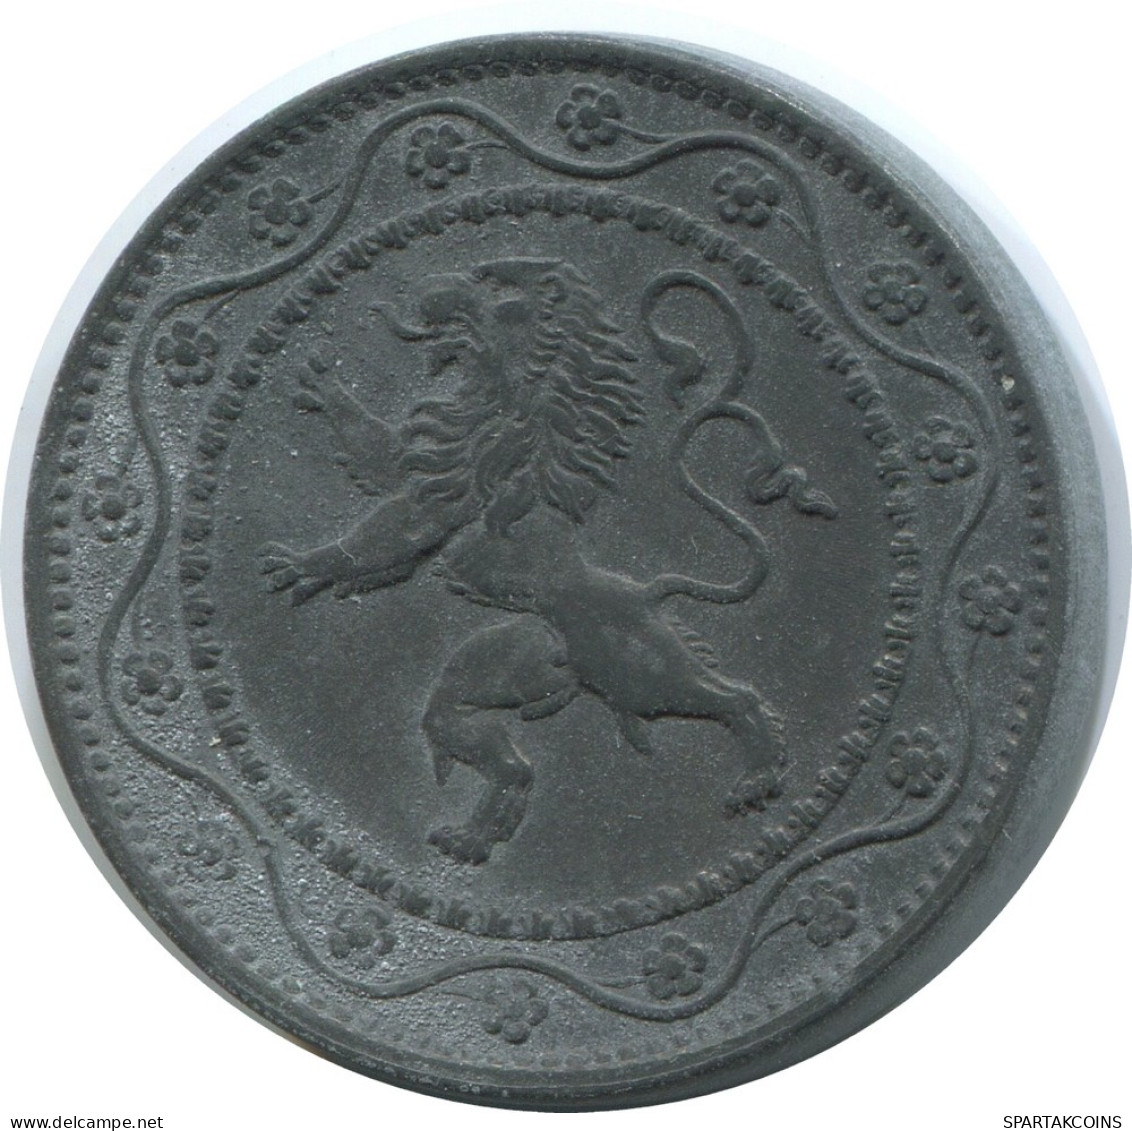 25 CENTIMES 1915 BELGIQUE-BELGIE BELGIEN BELGIUM Münze #AE735.16.D - 25 Cents